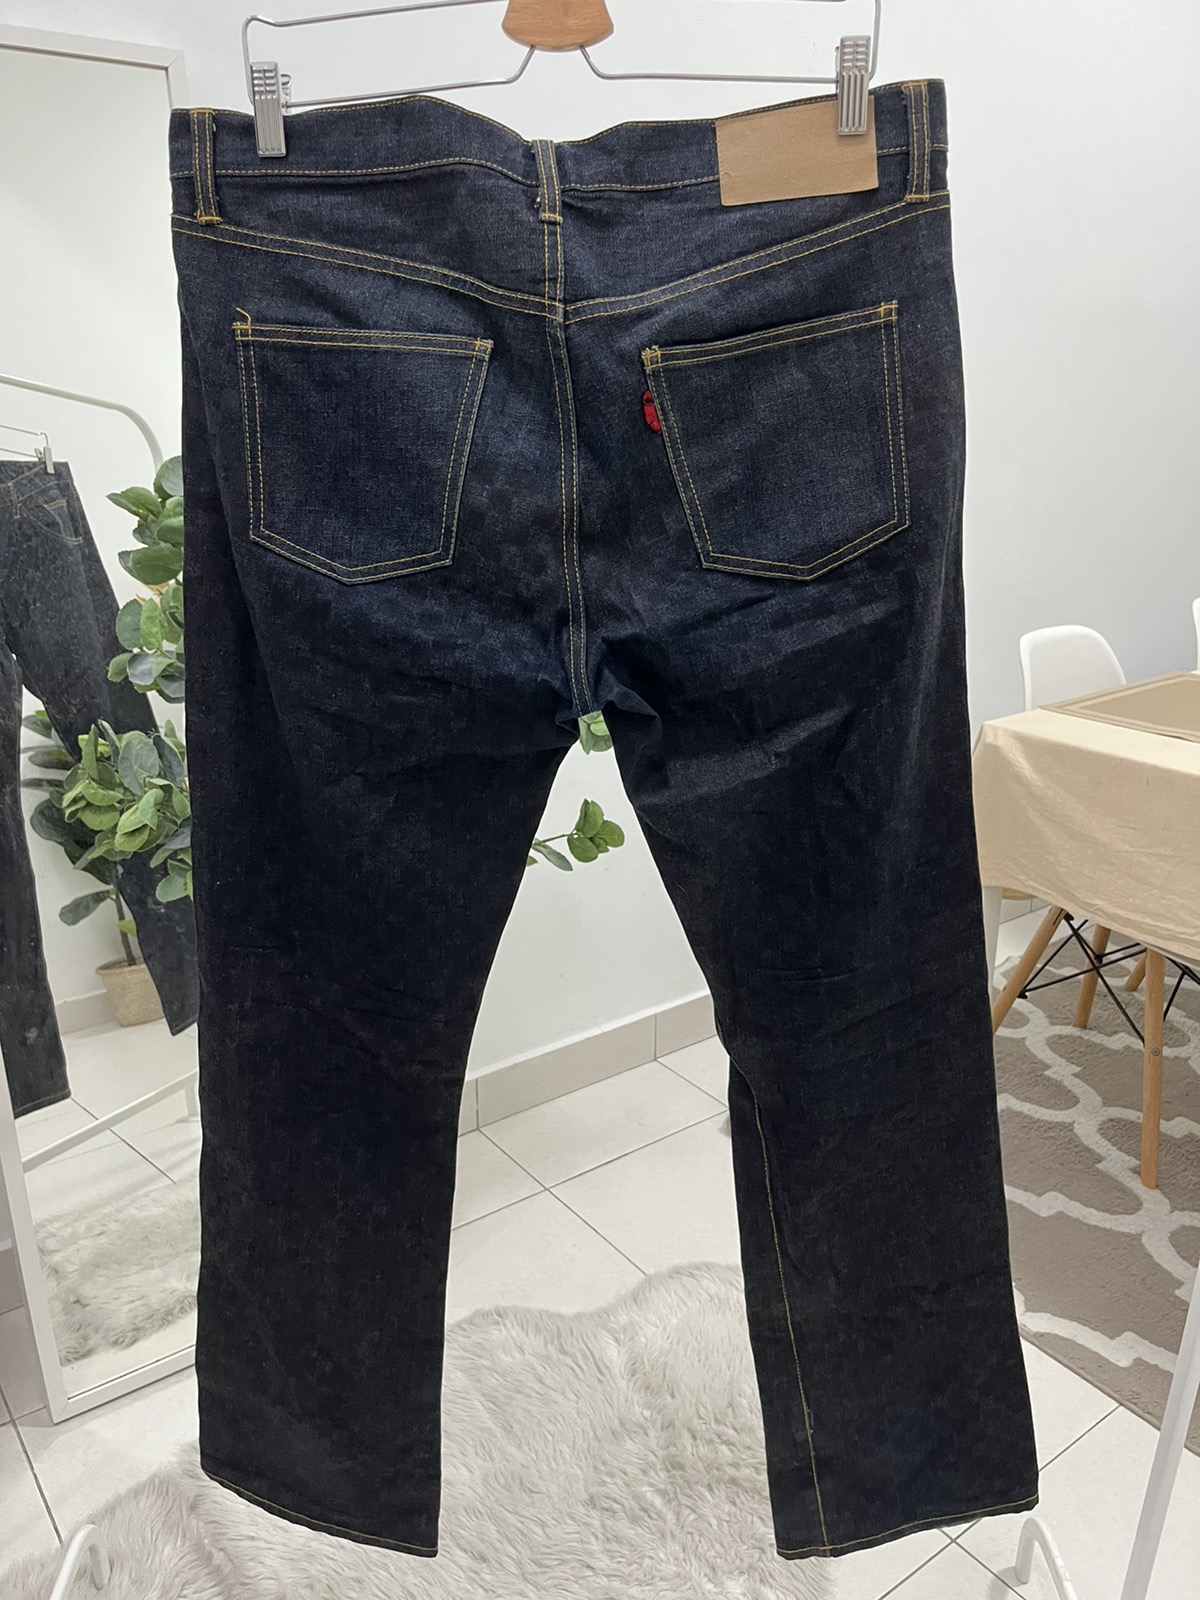 Rare Sasquatchfabrix Pattern Jeans - 2